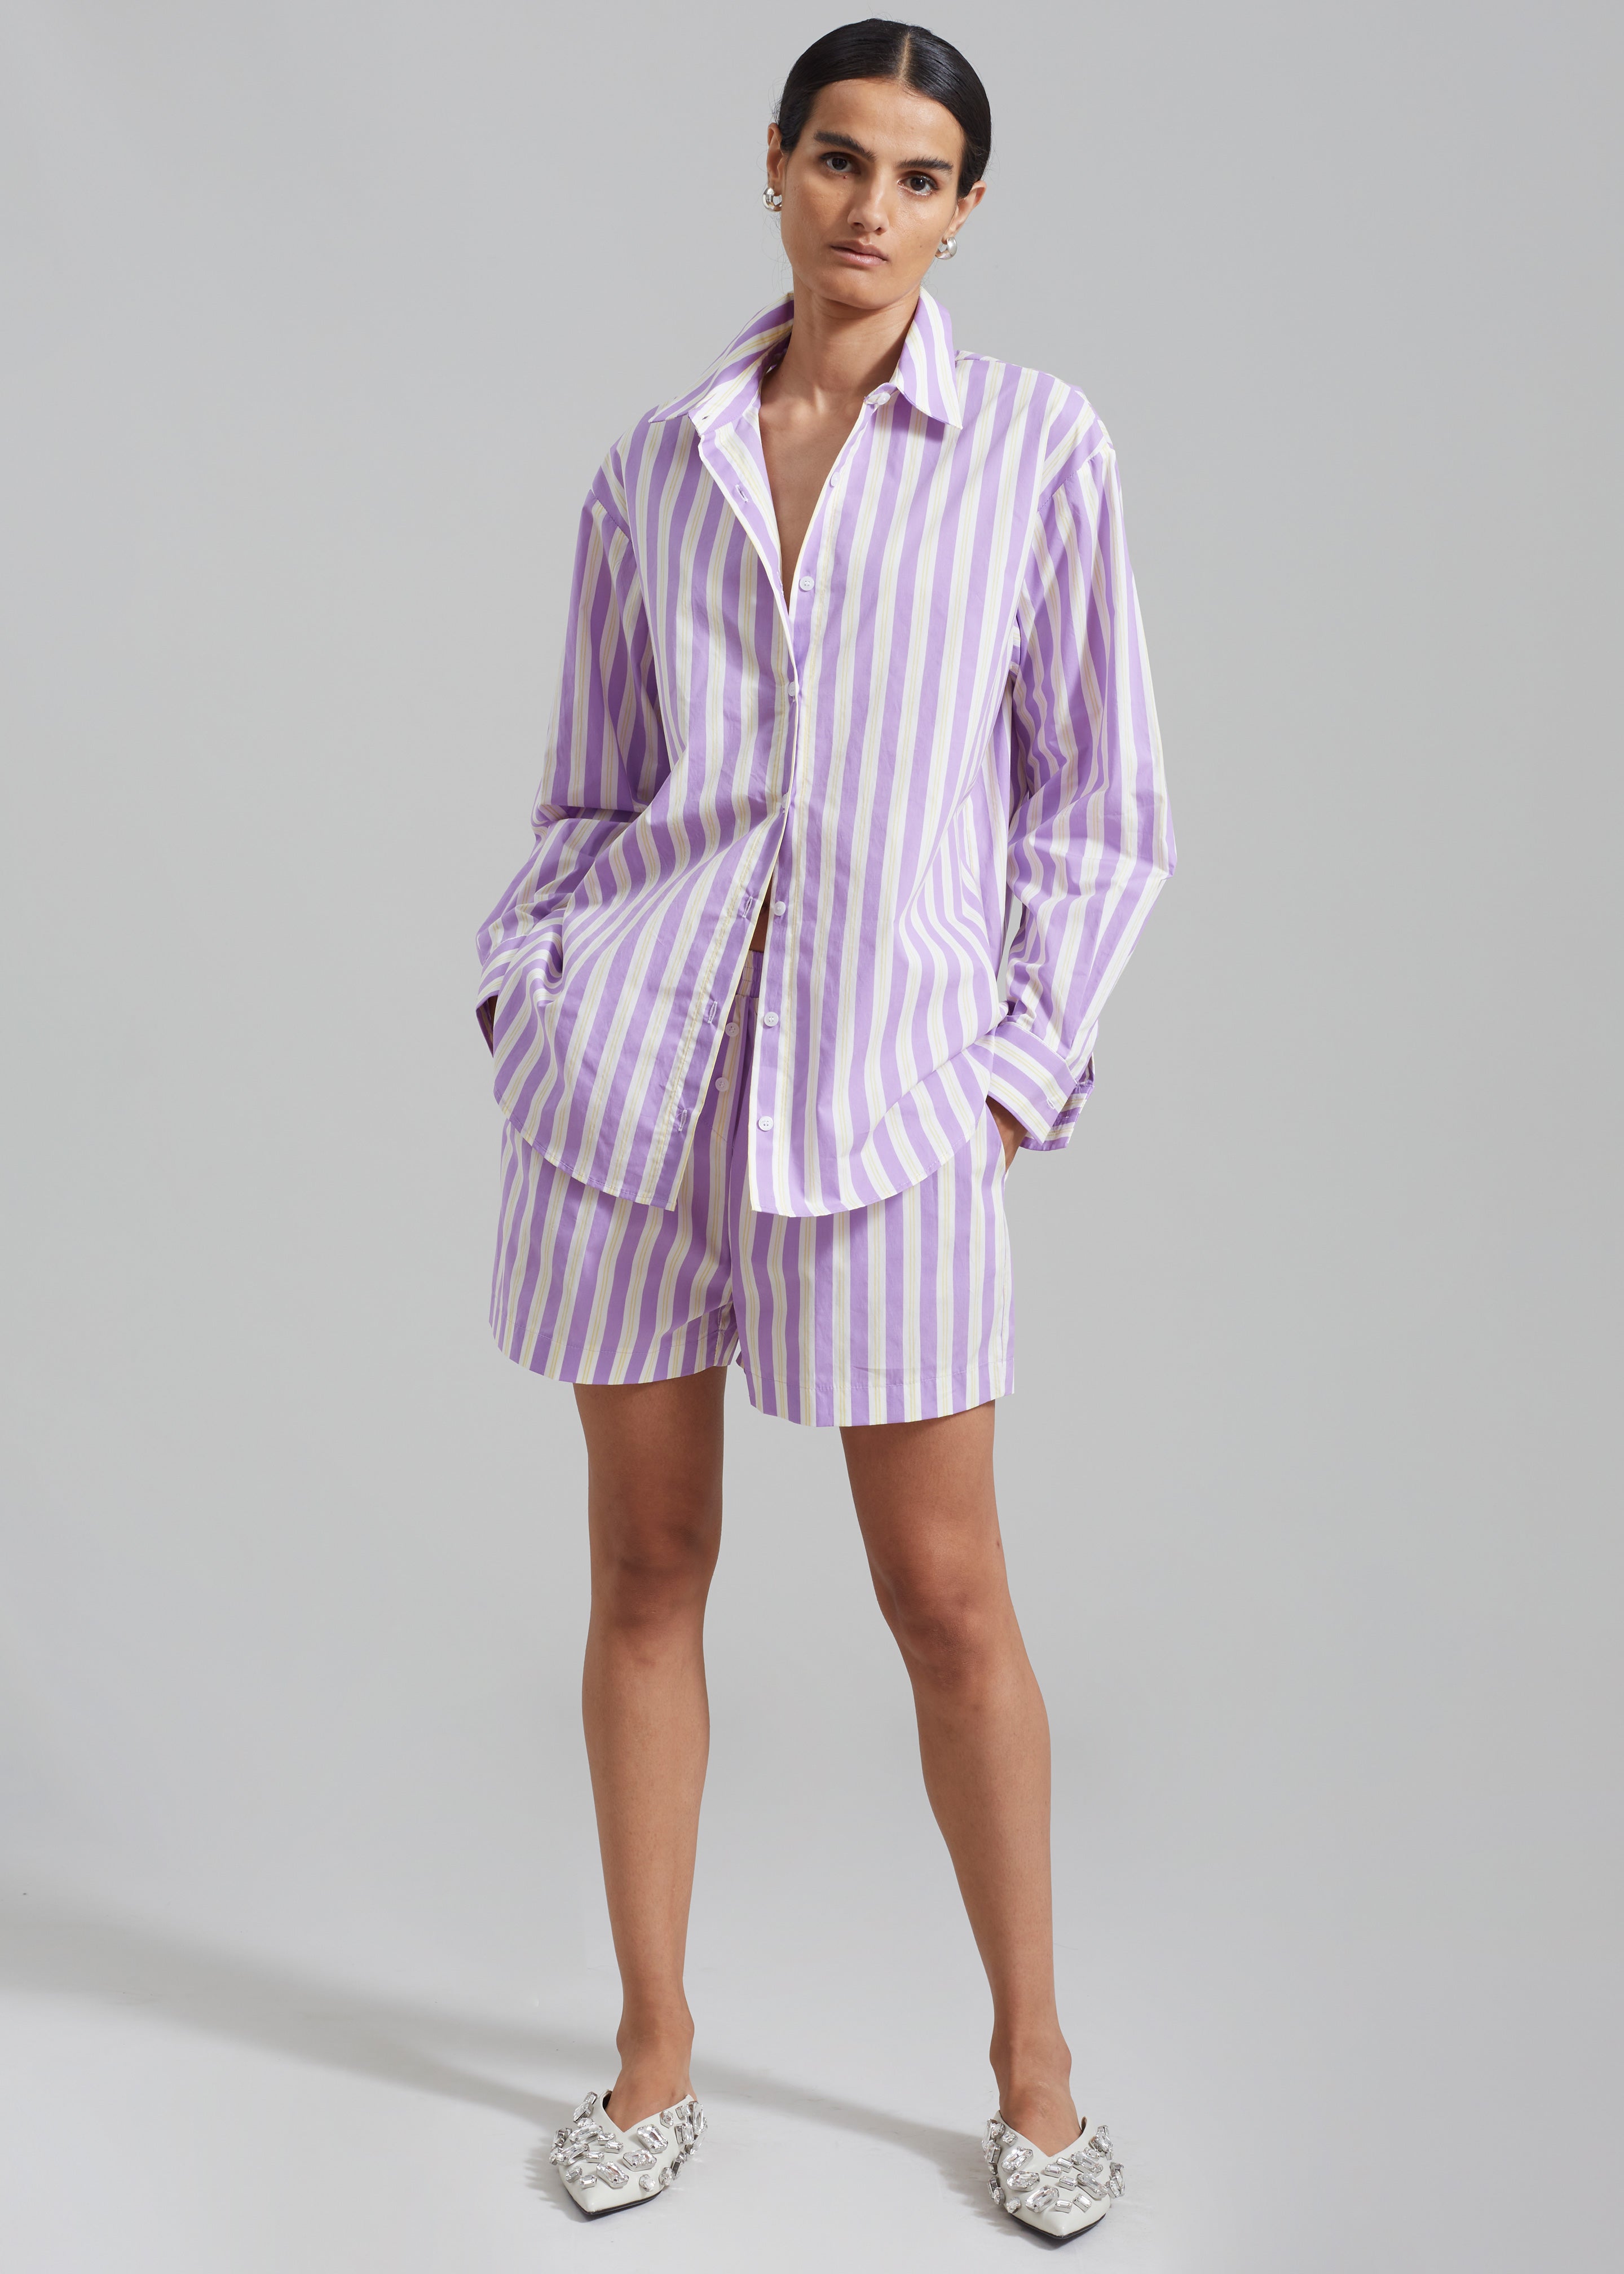 Juno Cotton Shirt - Violet Stripe - 5